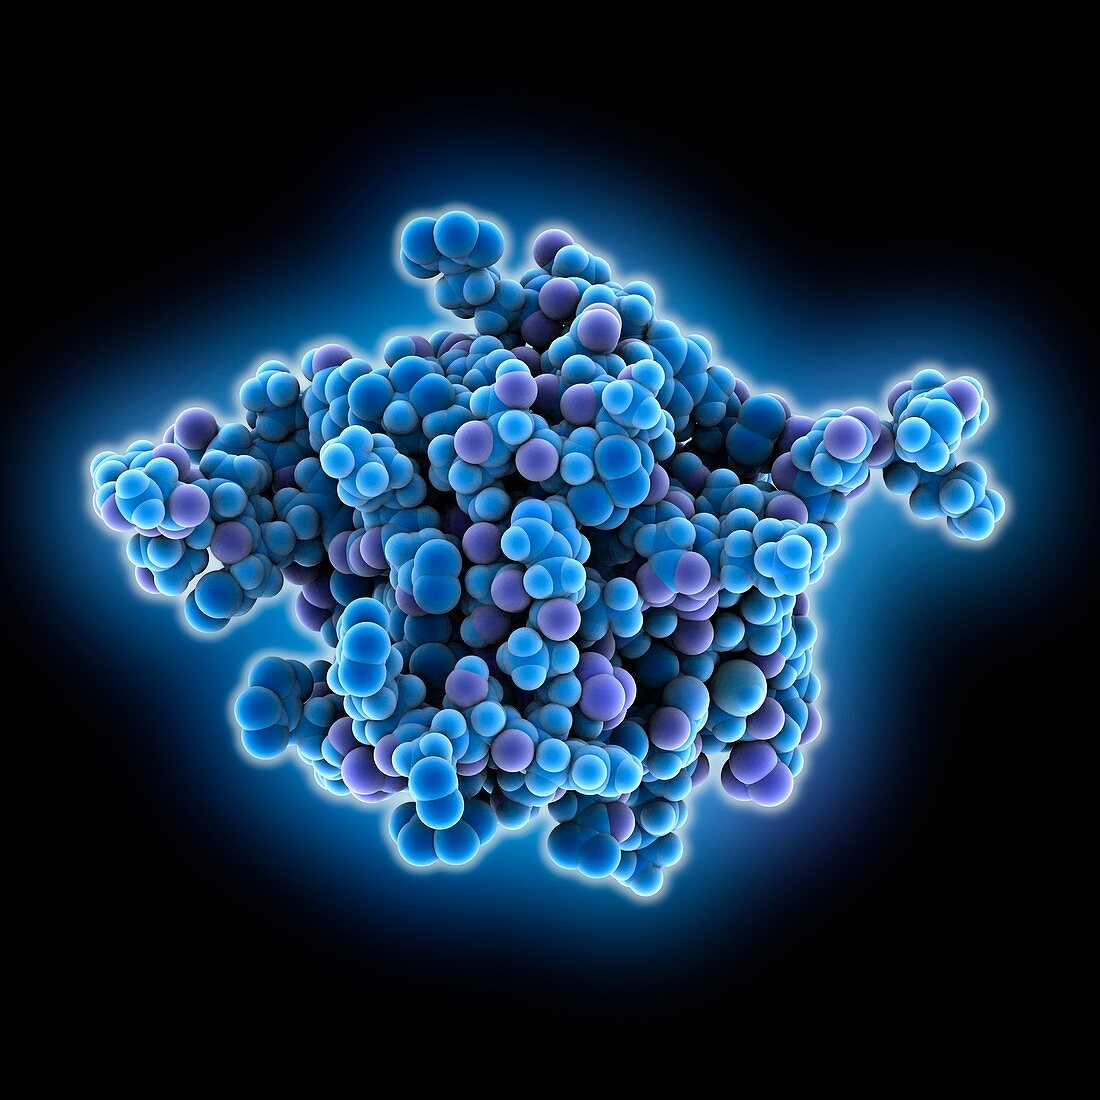 Simian virus SV40 large T antigen